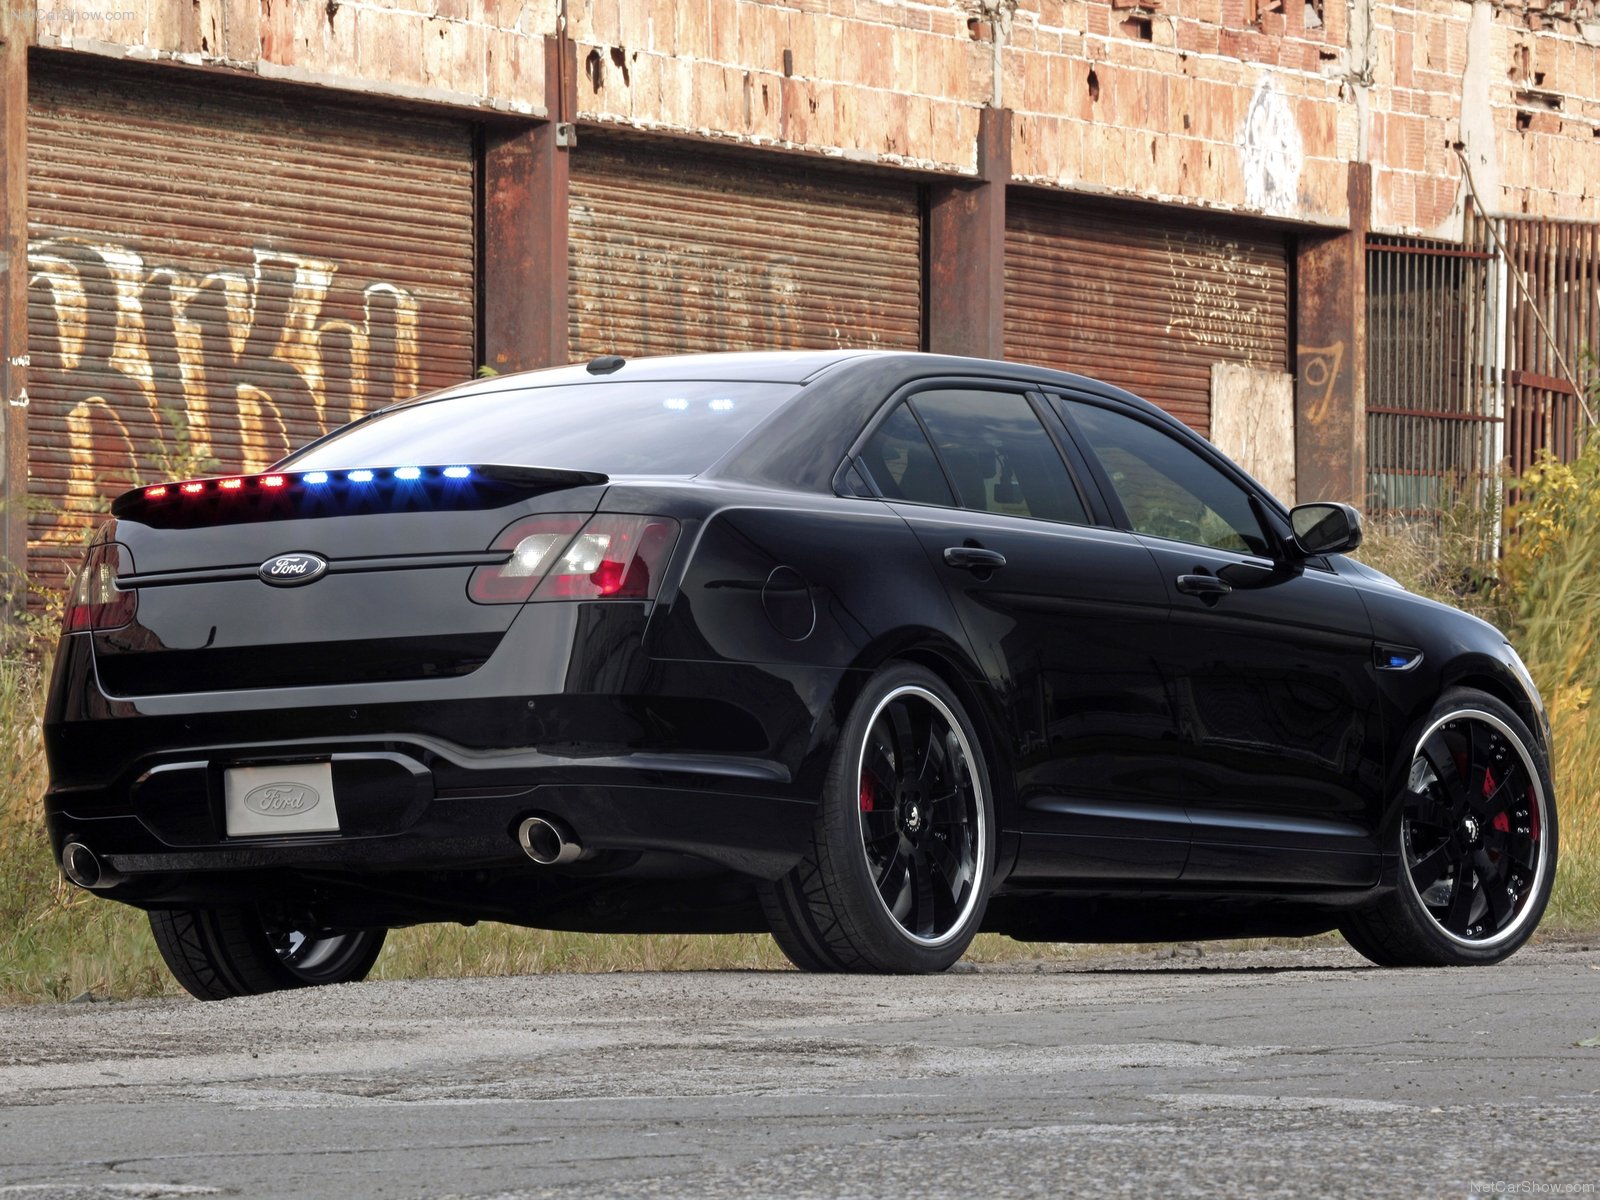 Ford-Taurus_Police_Interceptor_mp8_pic_76590.jpg